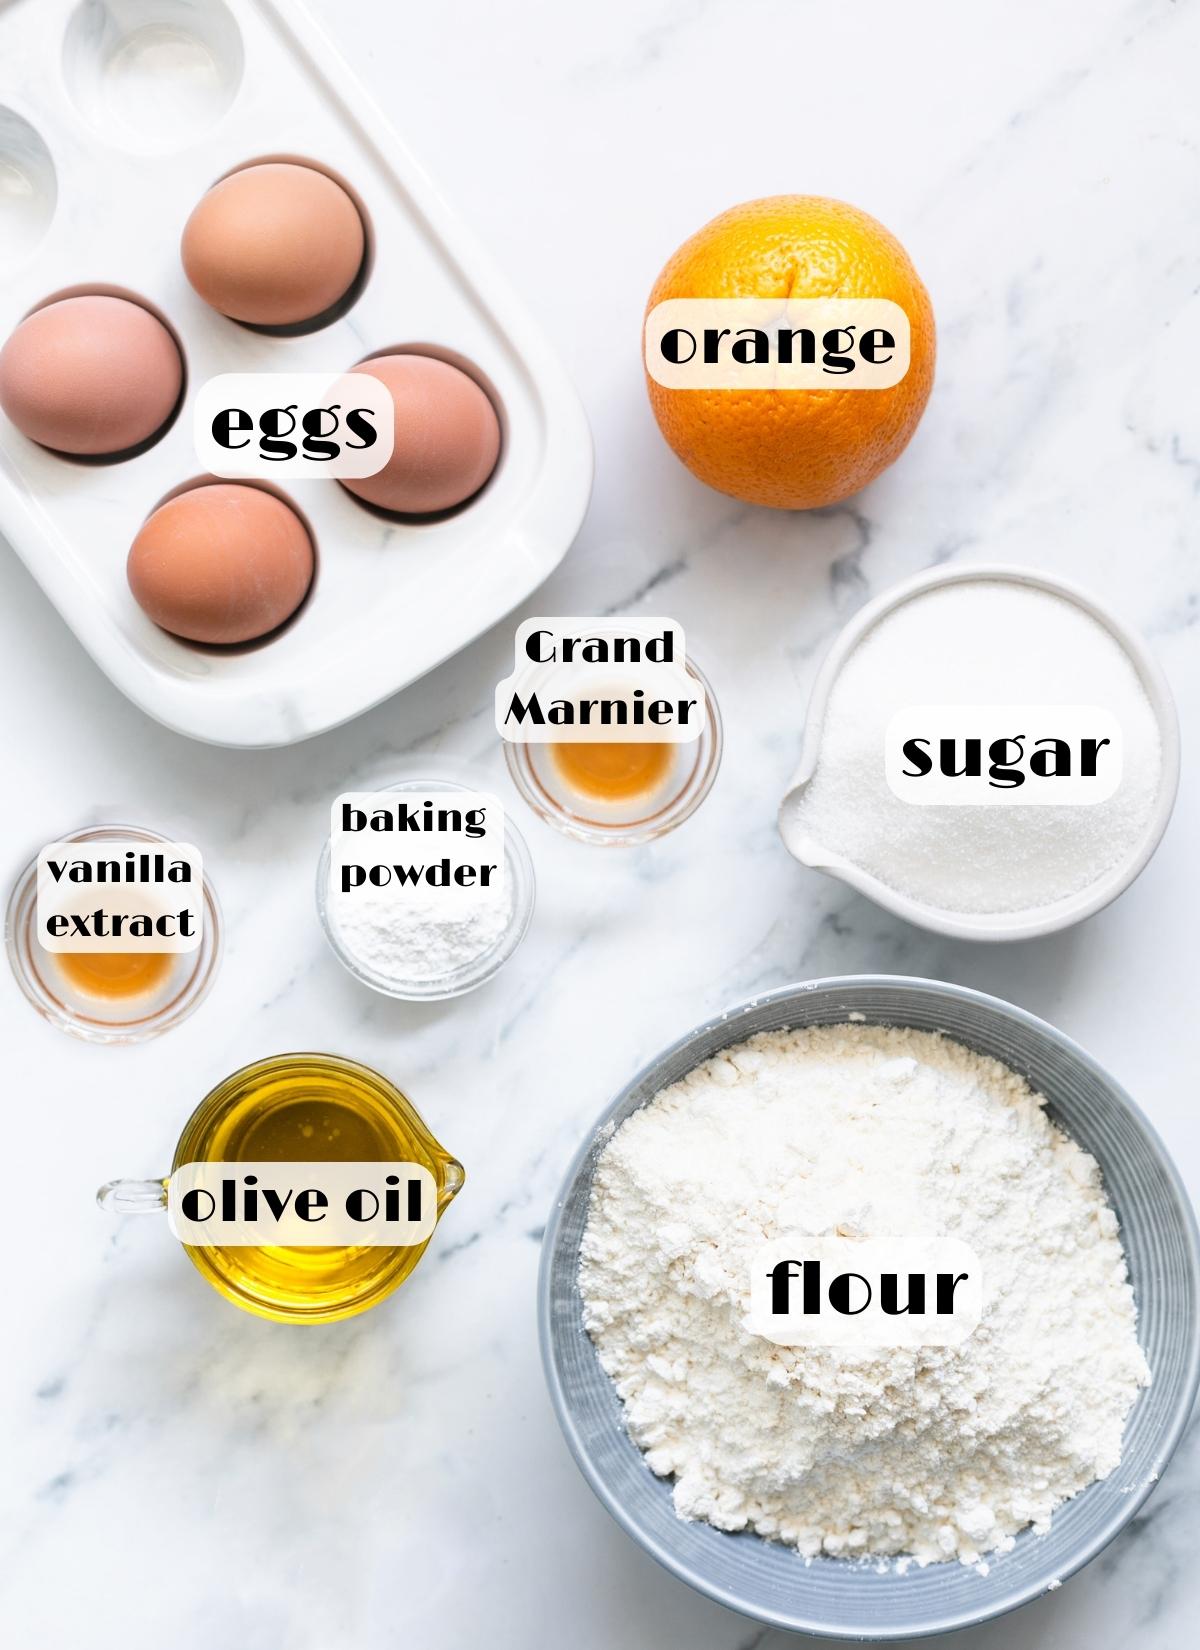 Italian hangover cake ingredients: flour, eggs, sugar, Grand Marnier, orange, olive oil, vanilla, baking powder.